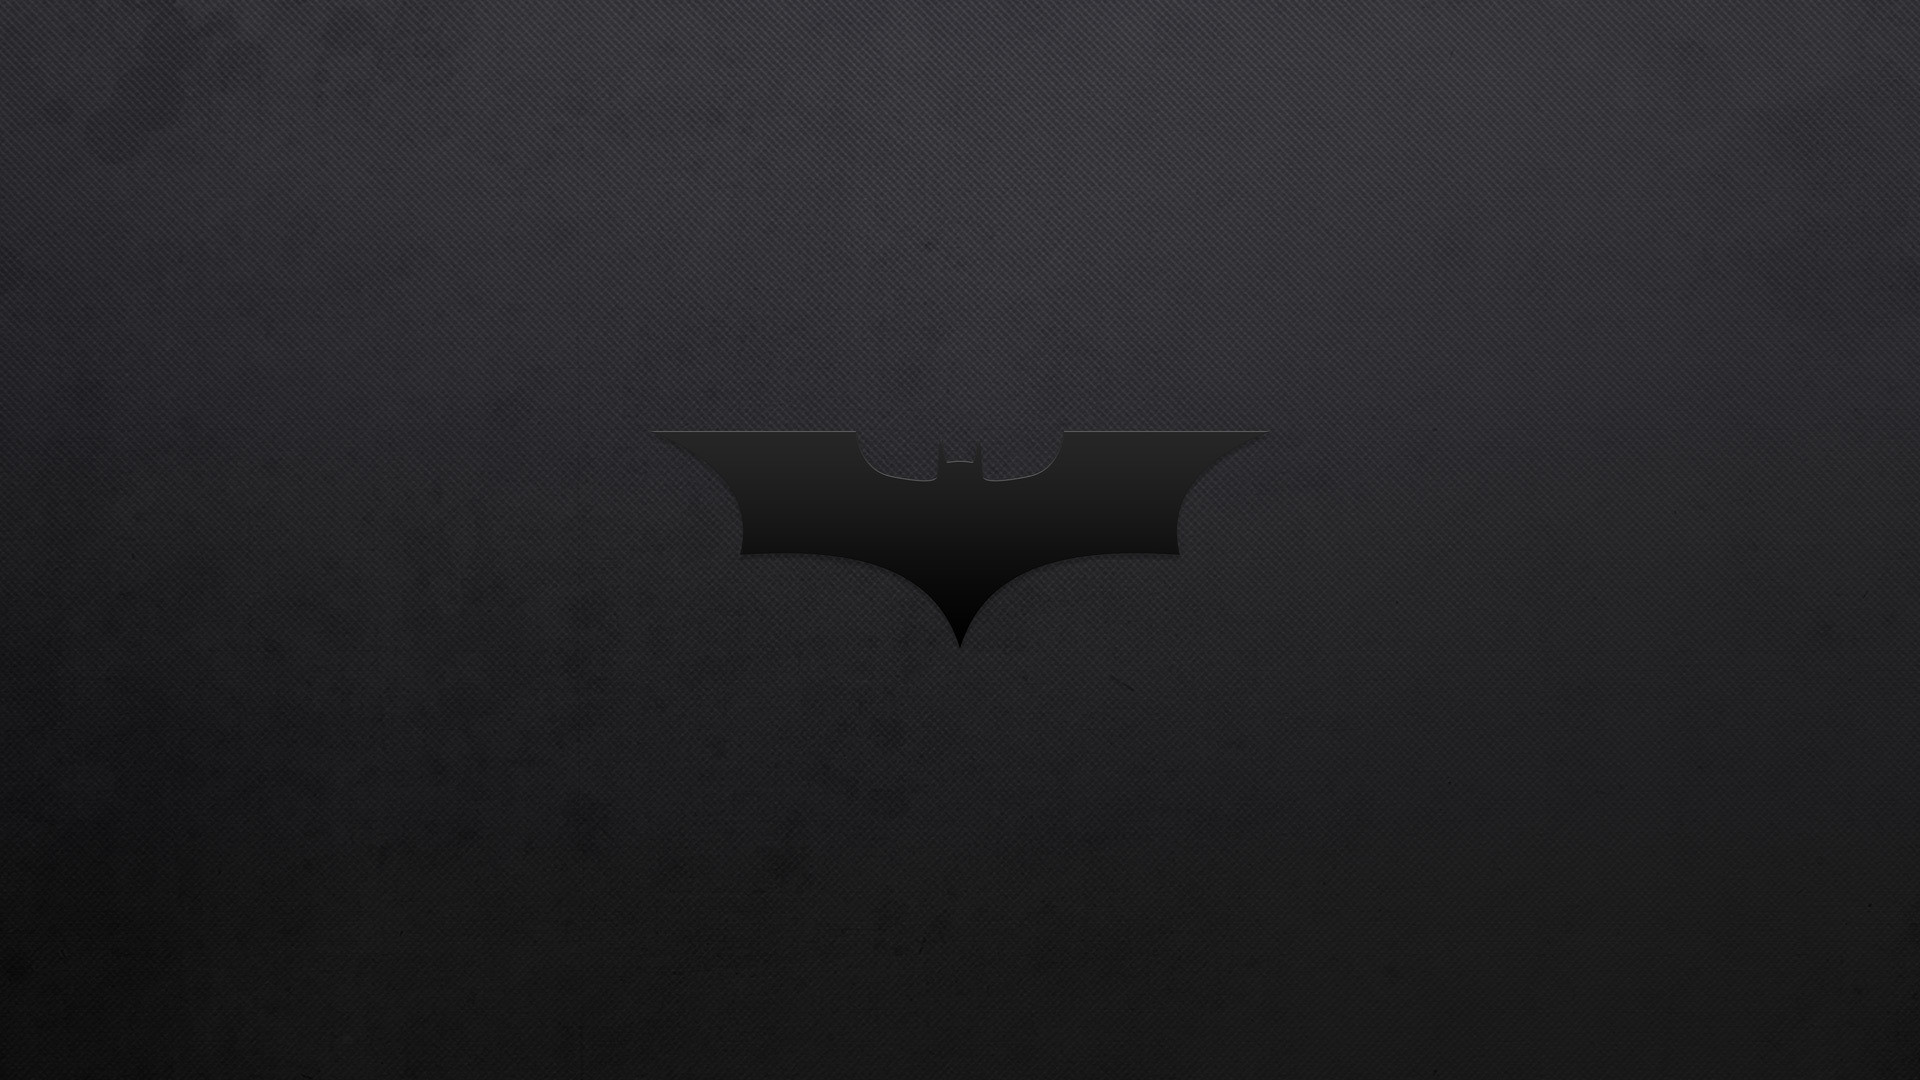 batman logo wallpaper-19